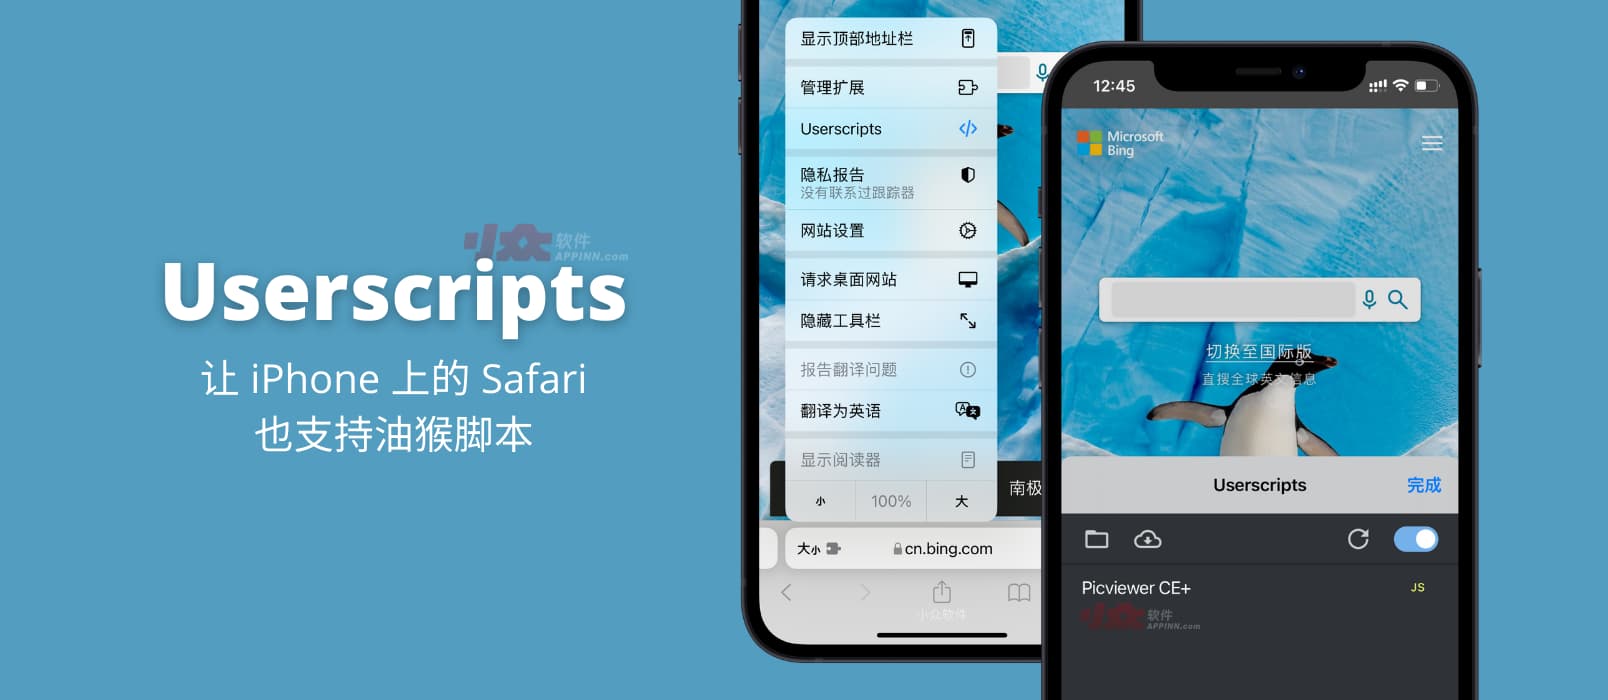 Userscripts - 免费开源的「油猴脚本」管理器，让 iPhone 上的 Safari 也支持油猴脚本